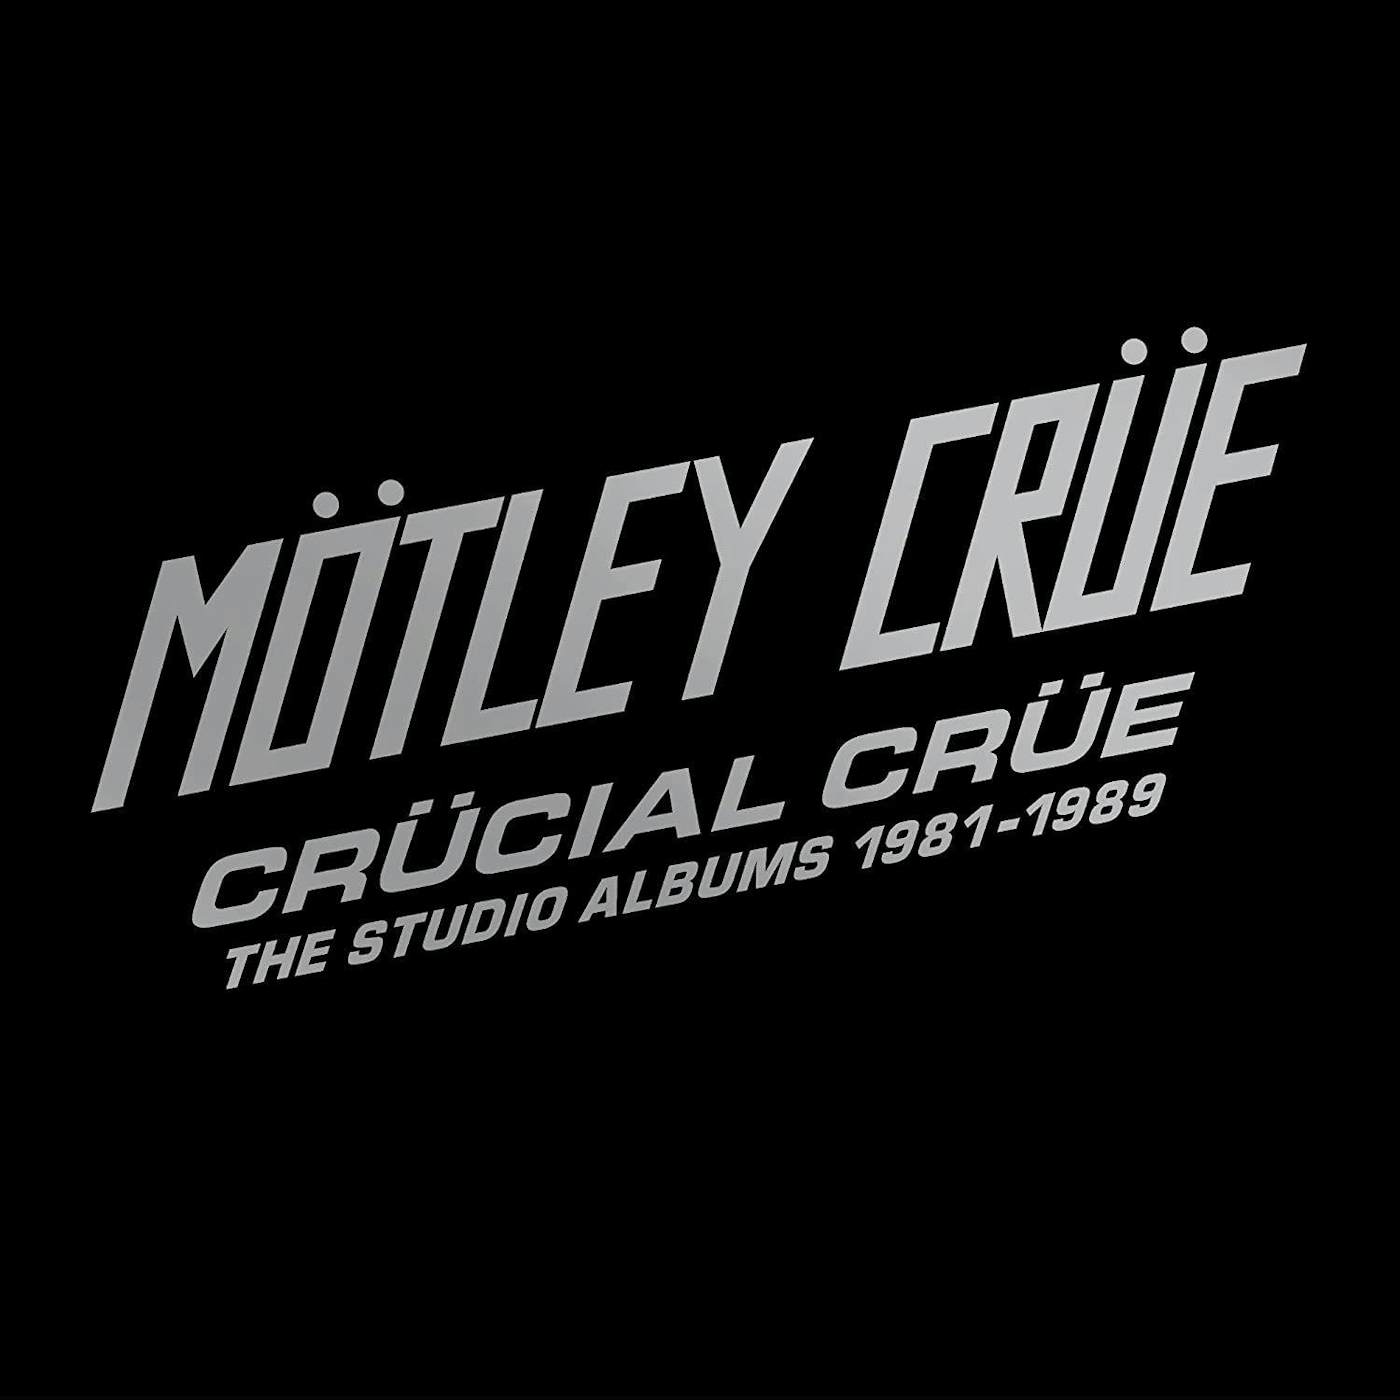 Mötley Crüe CRUCIAL CRUE - THE STUDIO ALBUMS 1981-1989 (LIMITED EDITION/5LP BOX) Vinyl Record